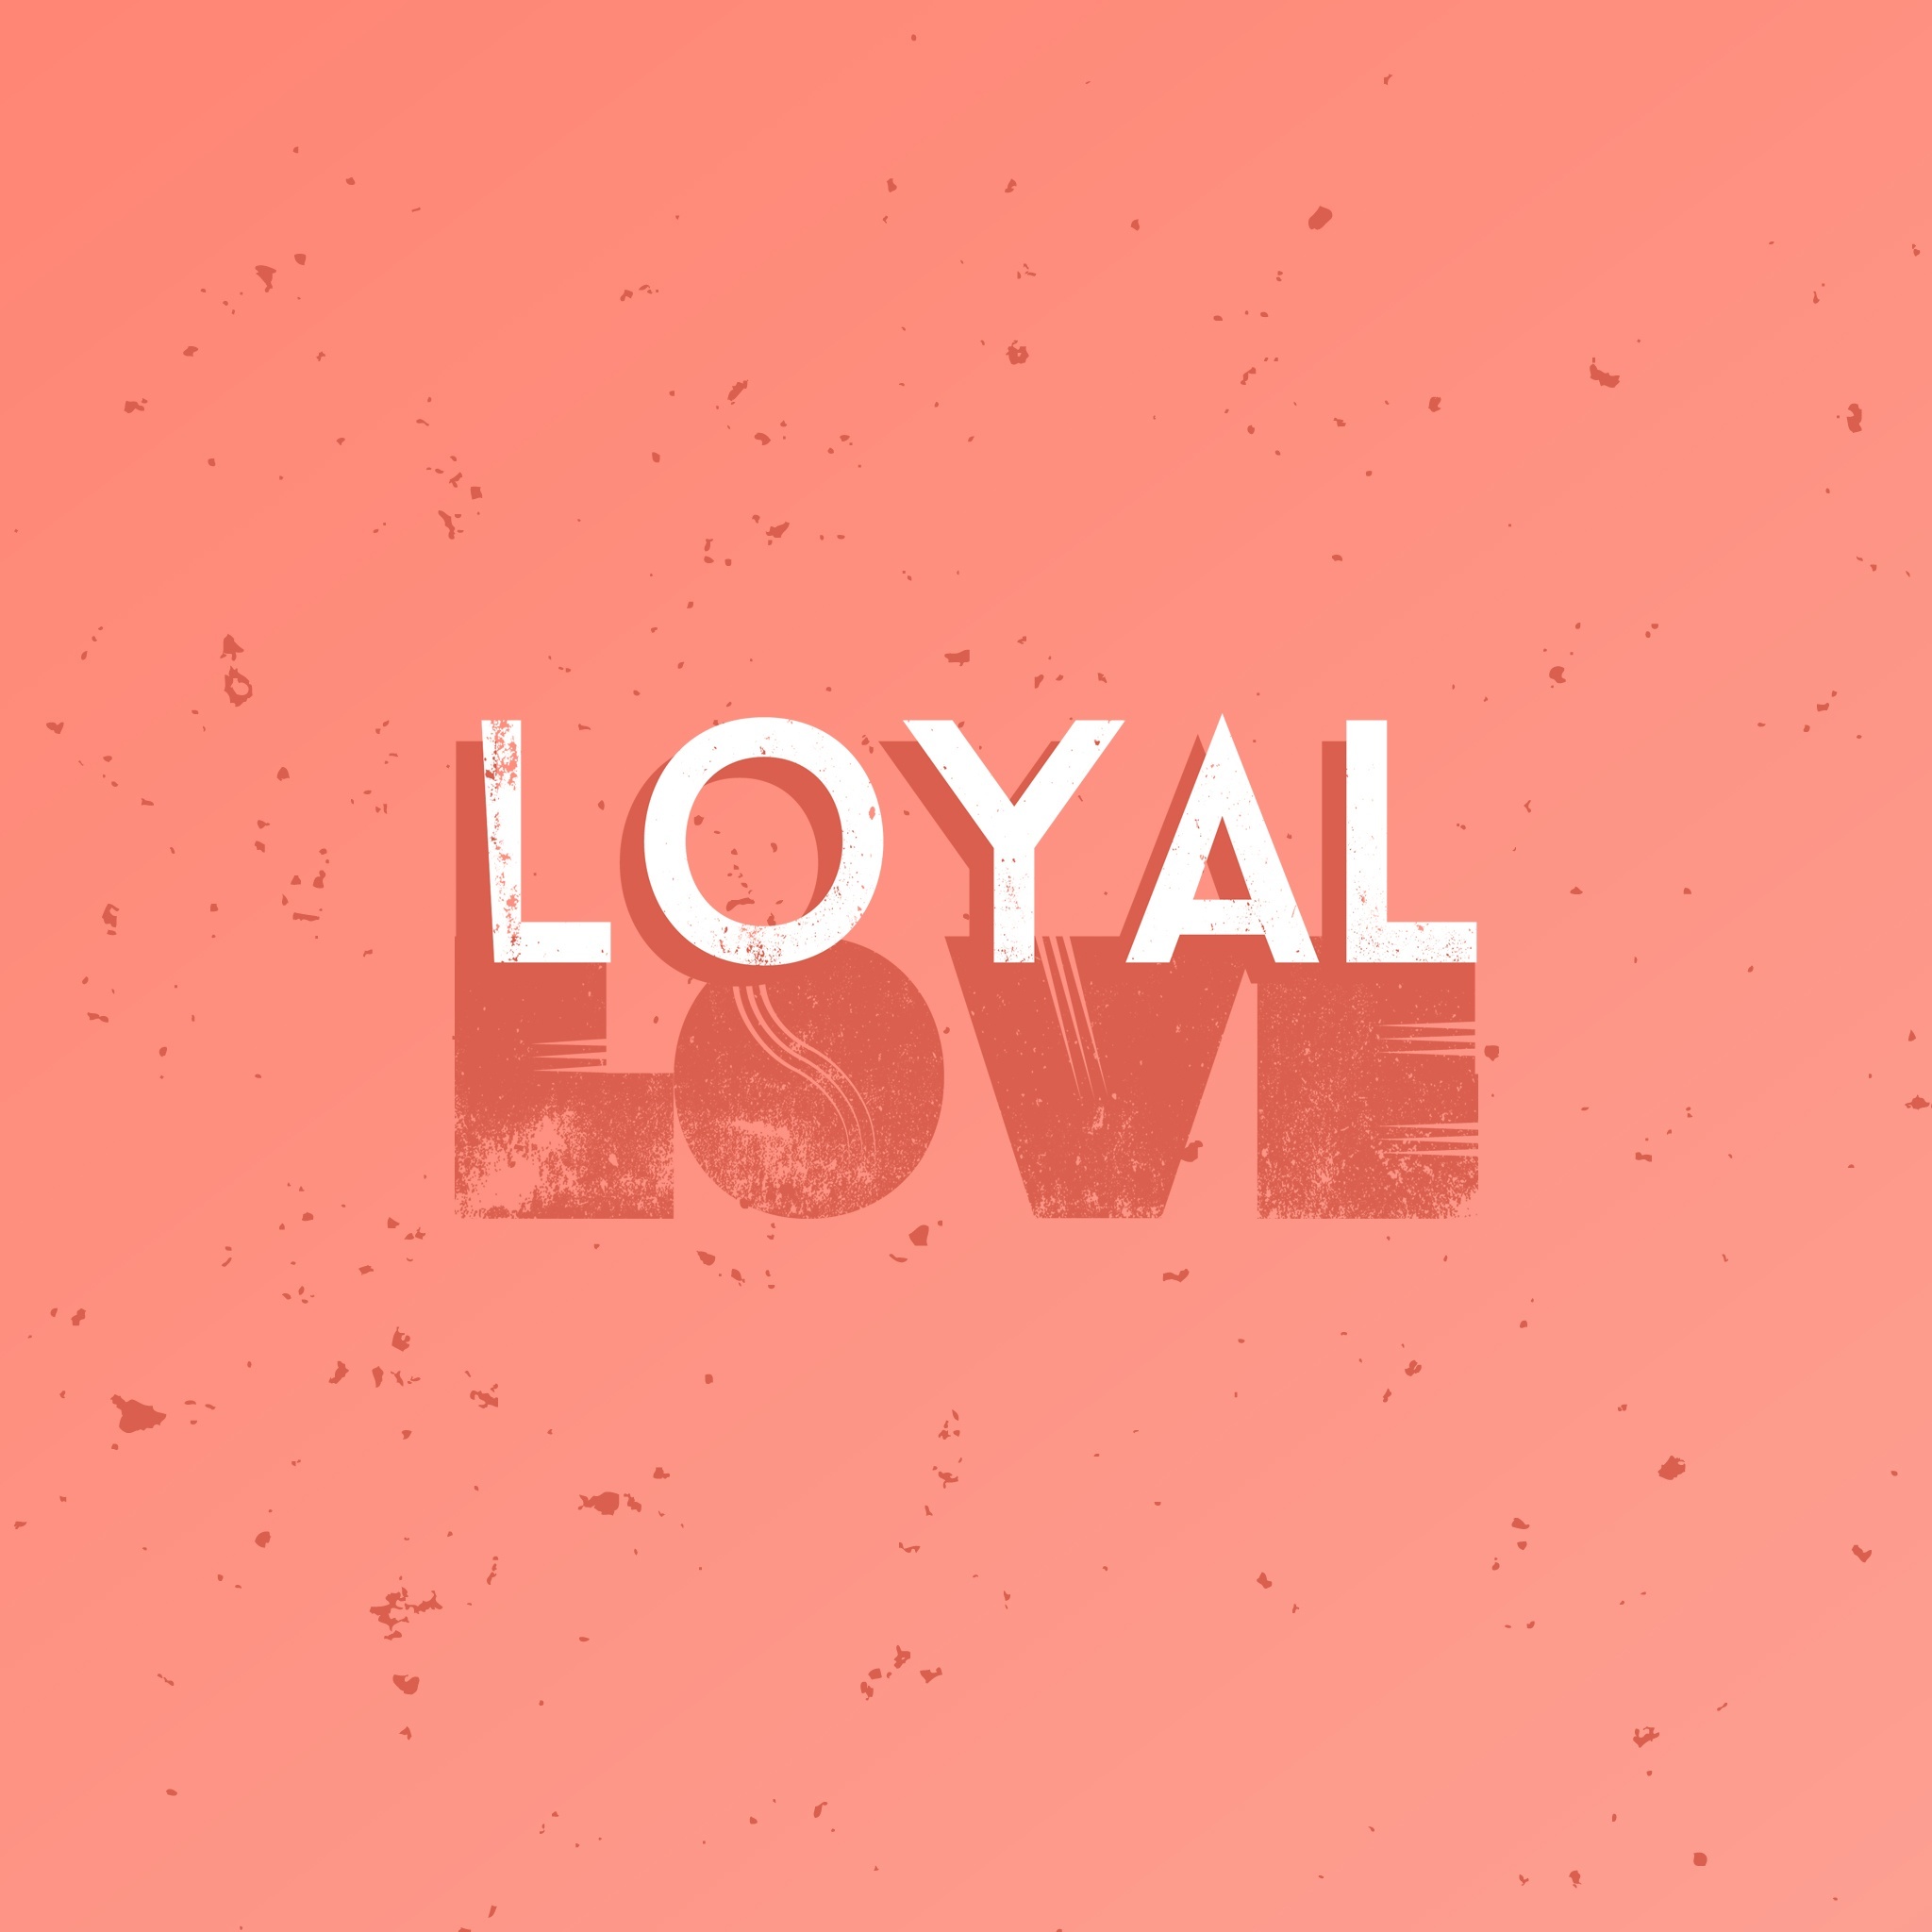 Loyal Love - Redeeming Love Part 1 - Daily Devotional